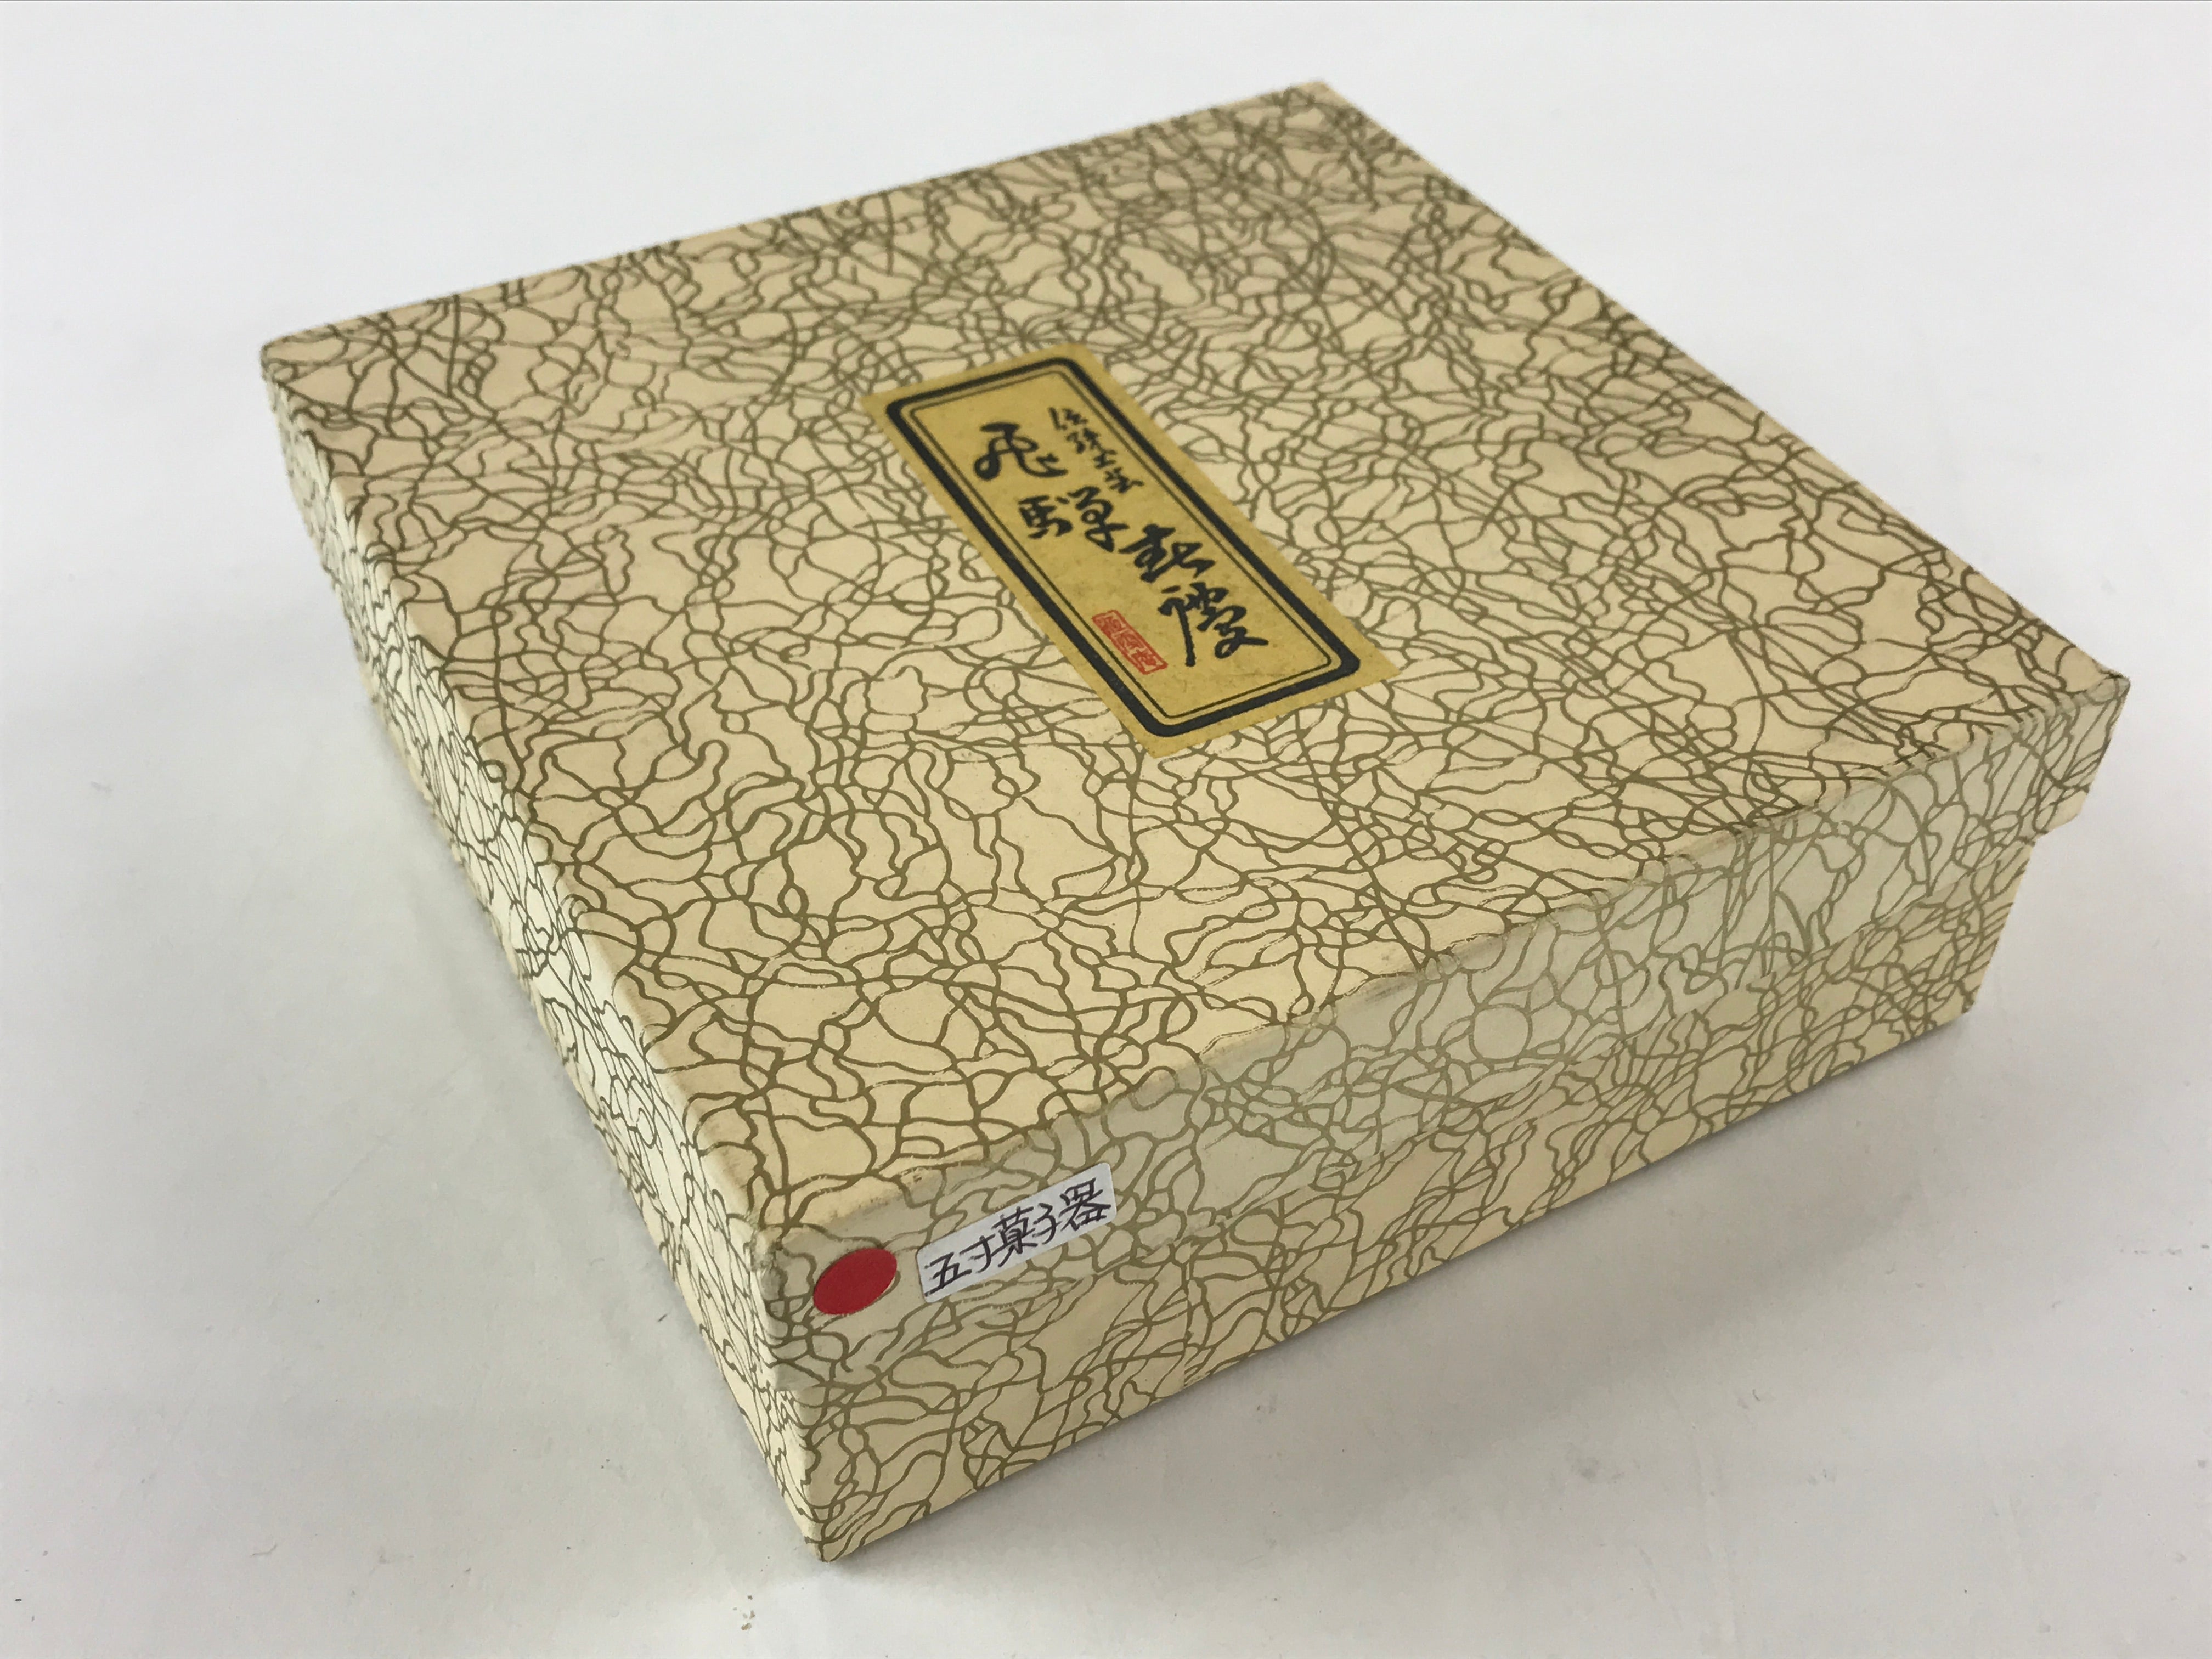 Japanese Shunkei-Nuri Lacquerware Wood Bowl Vtg Kashiki Tea Ceremony Red UR916